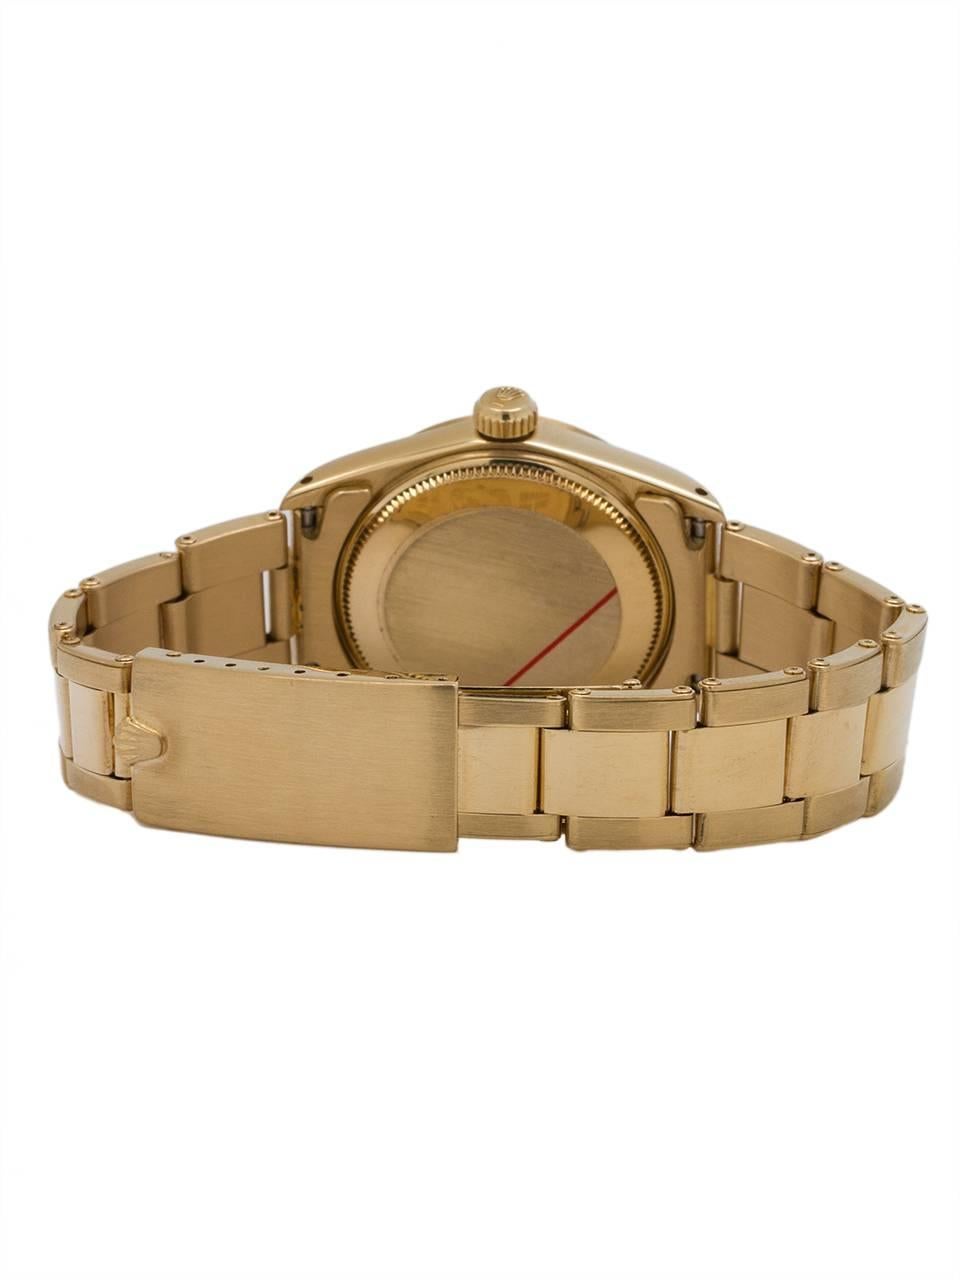 Women's or Men's Rolex Yellow Gold Datejust Midsize Wristwatch Ref 6827, circa 1982